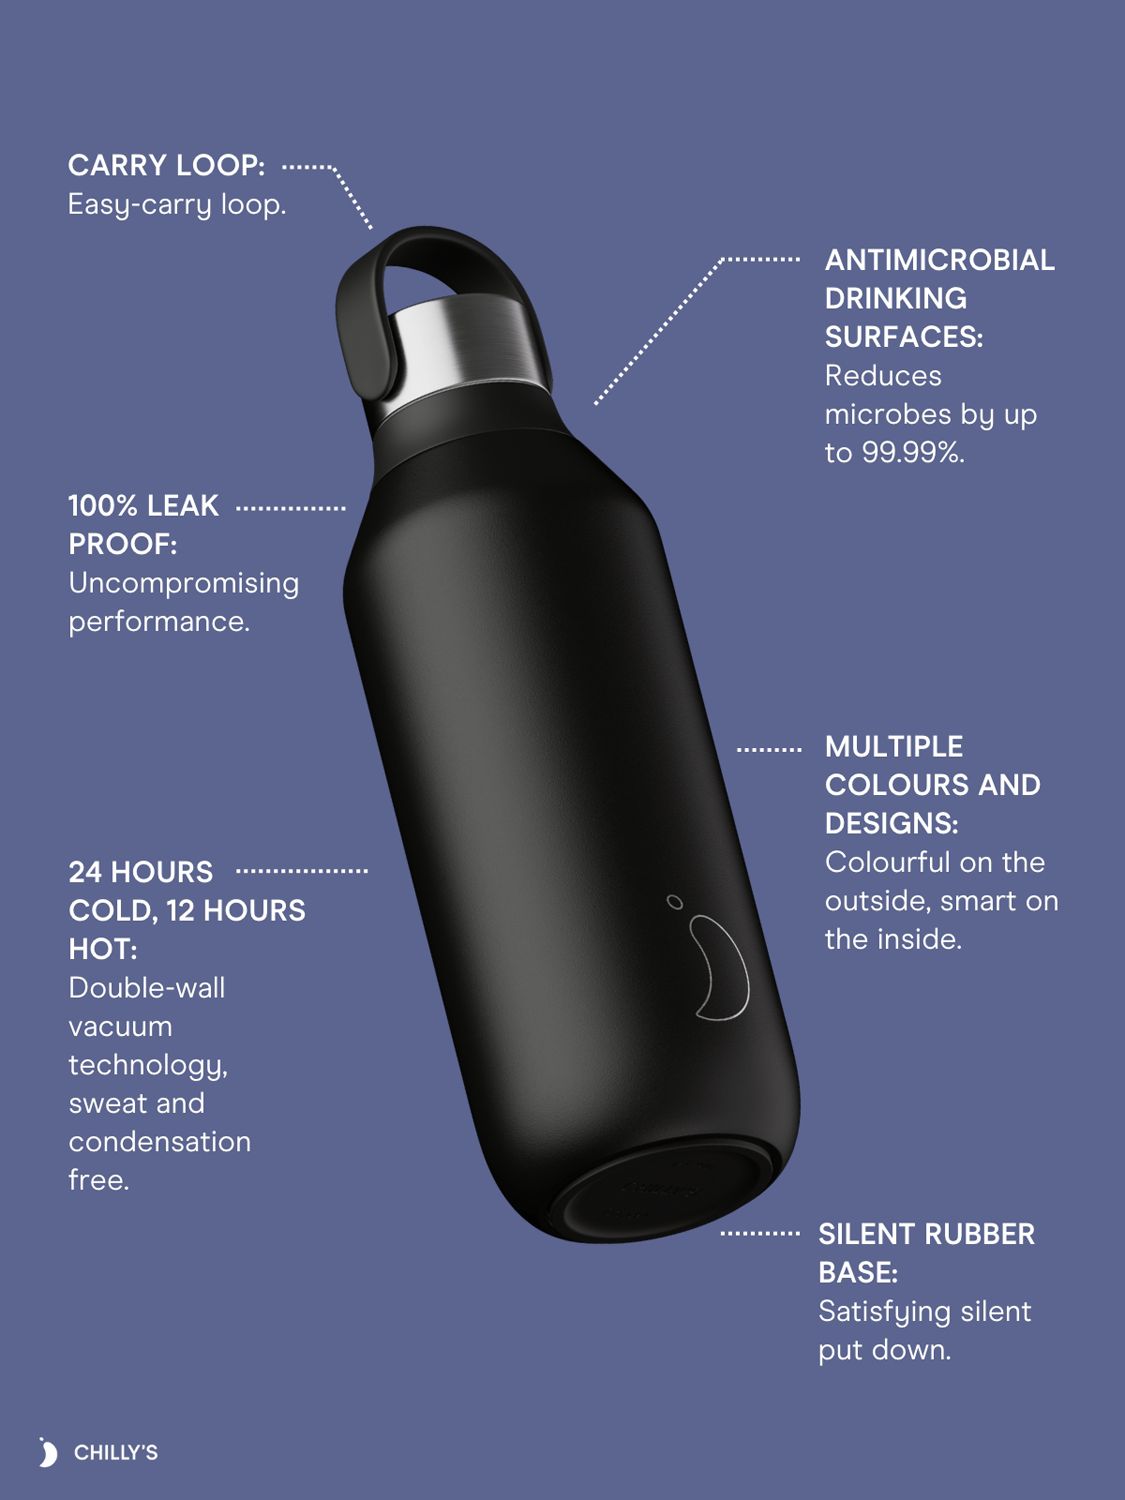 Black Metal Thermal Water Bottle by Lancome